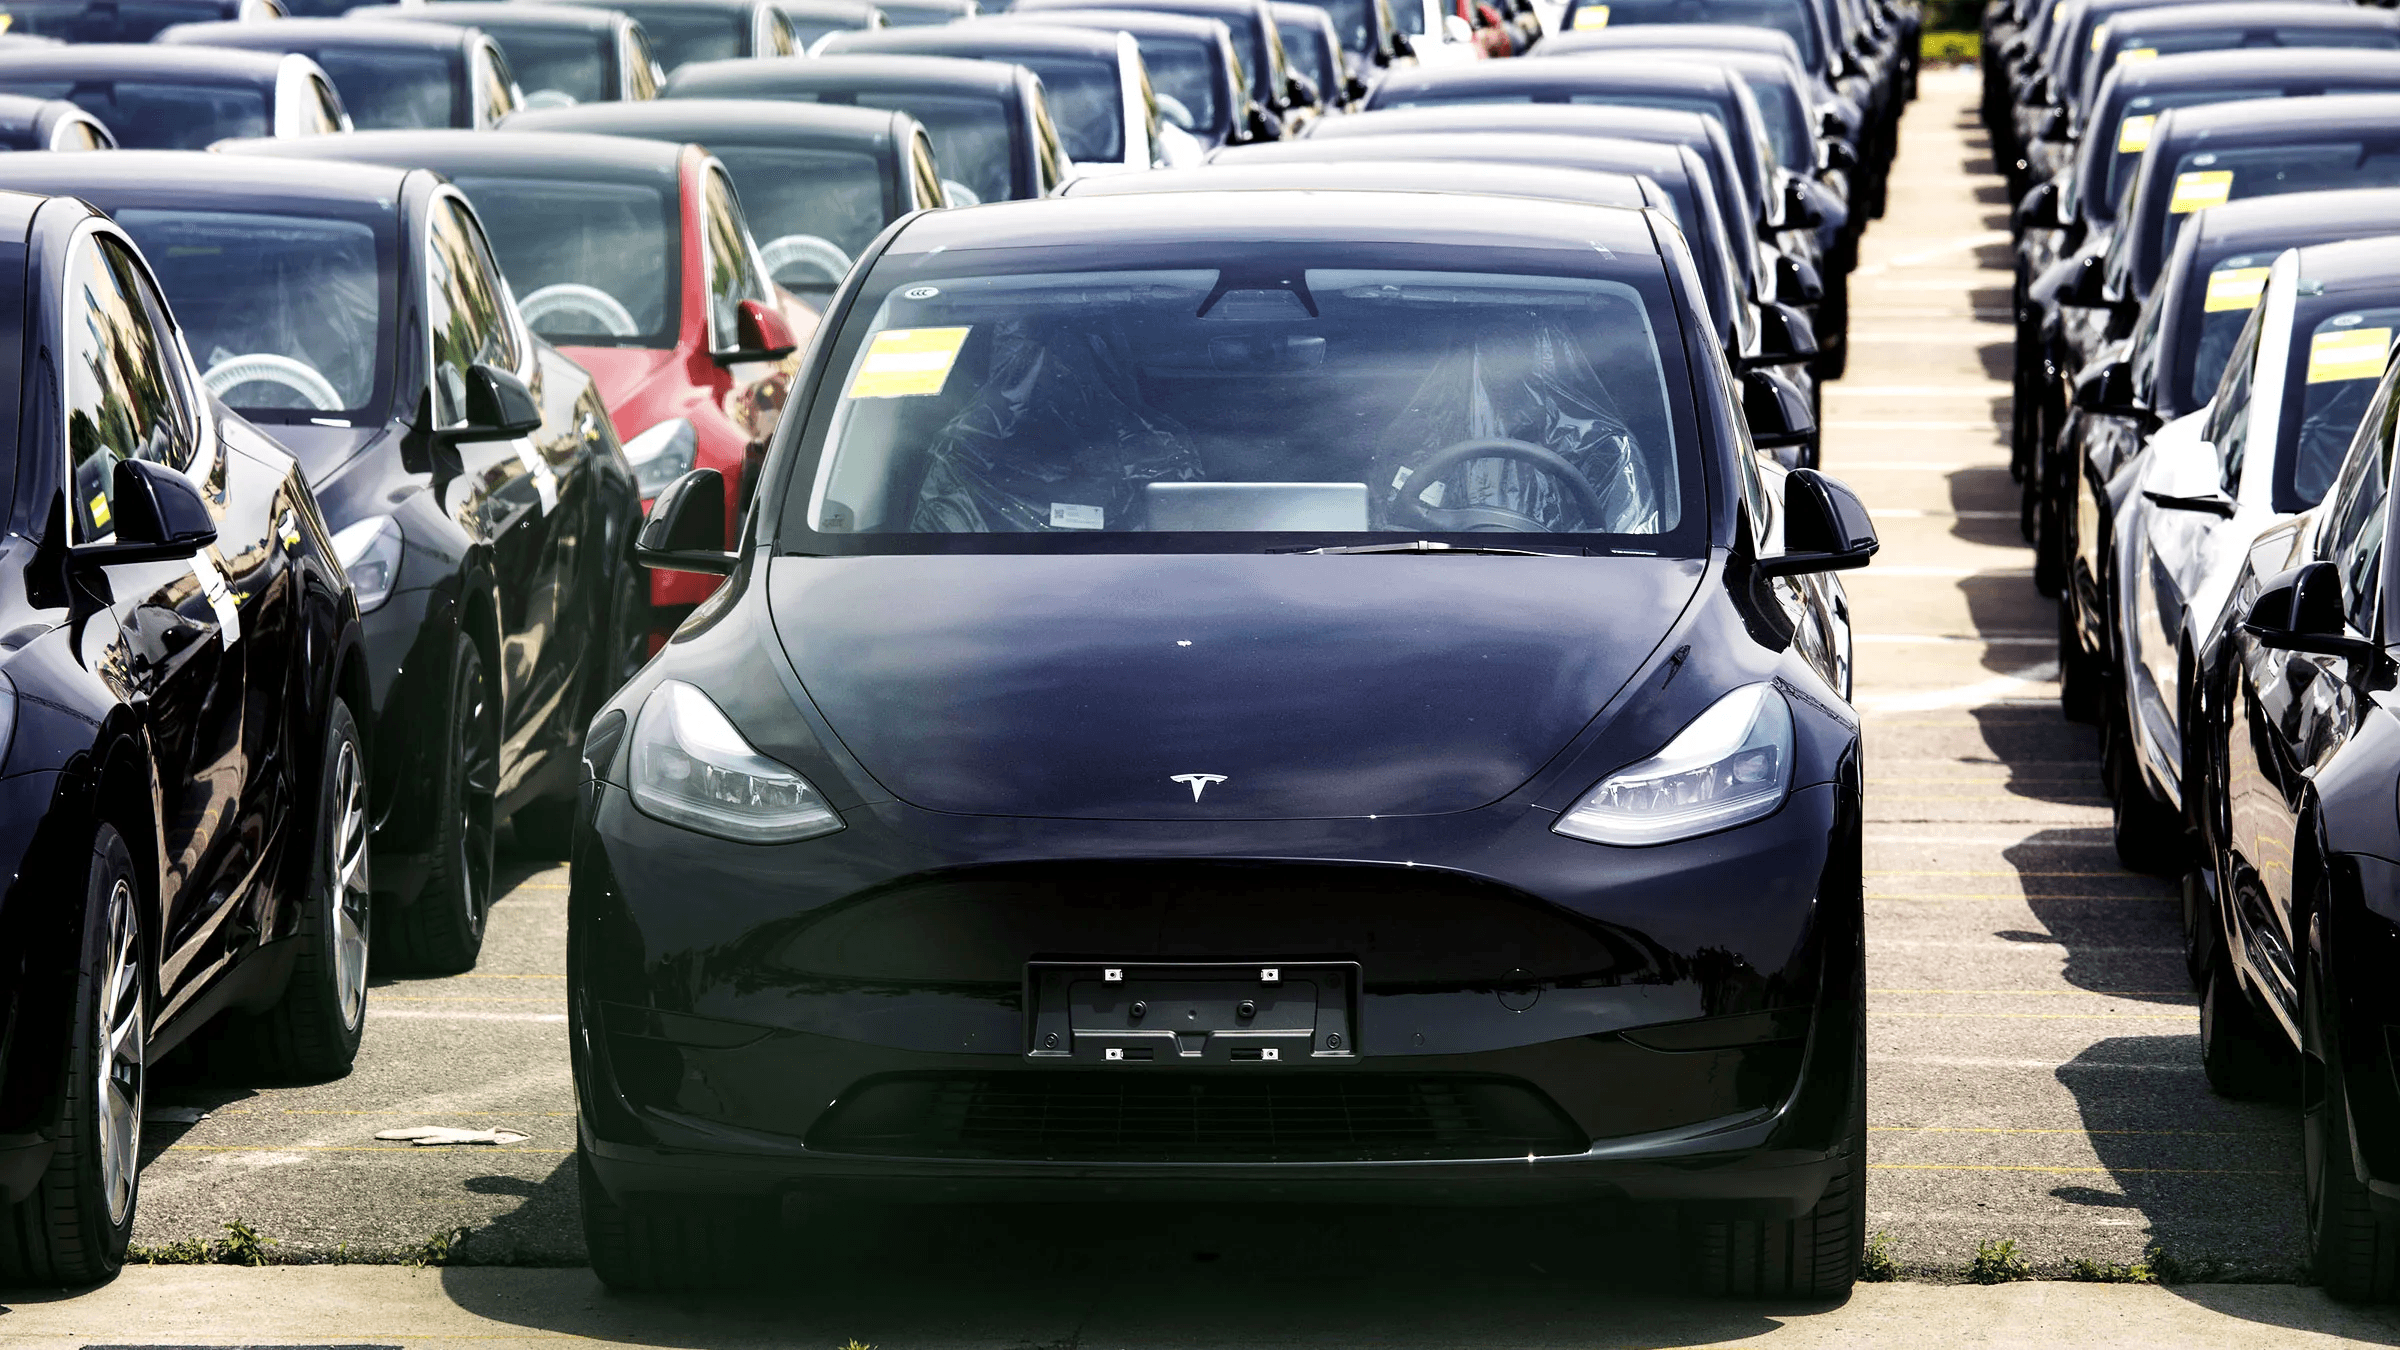 Foto de carro Tesla no trânsito